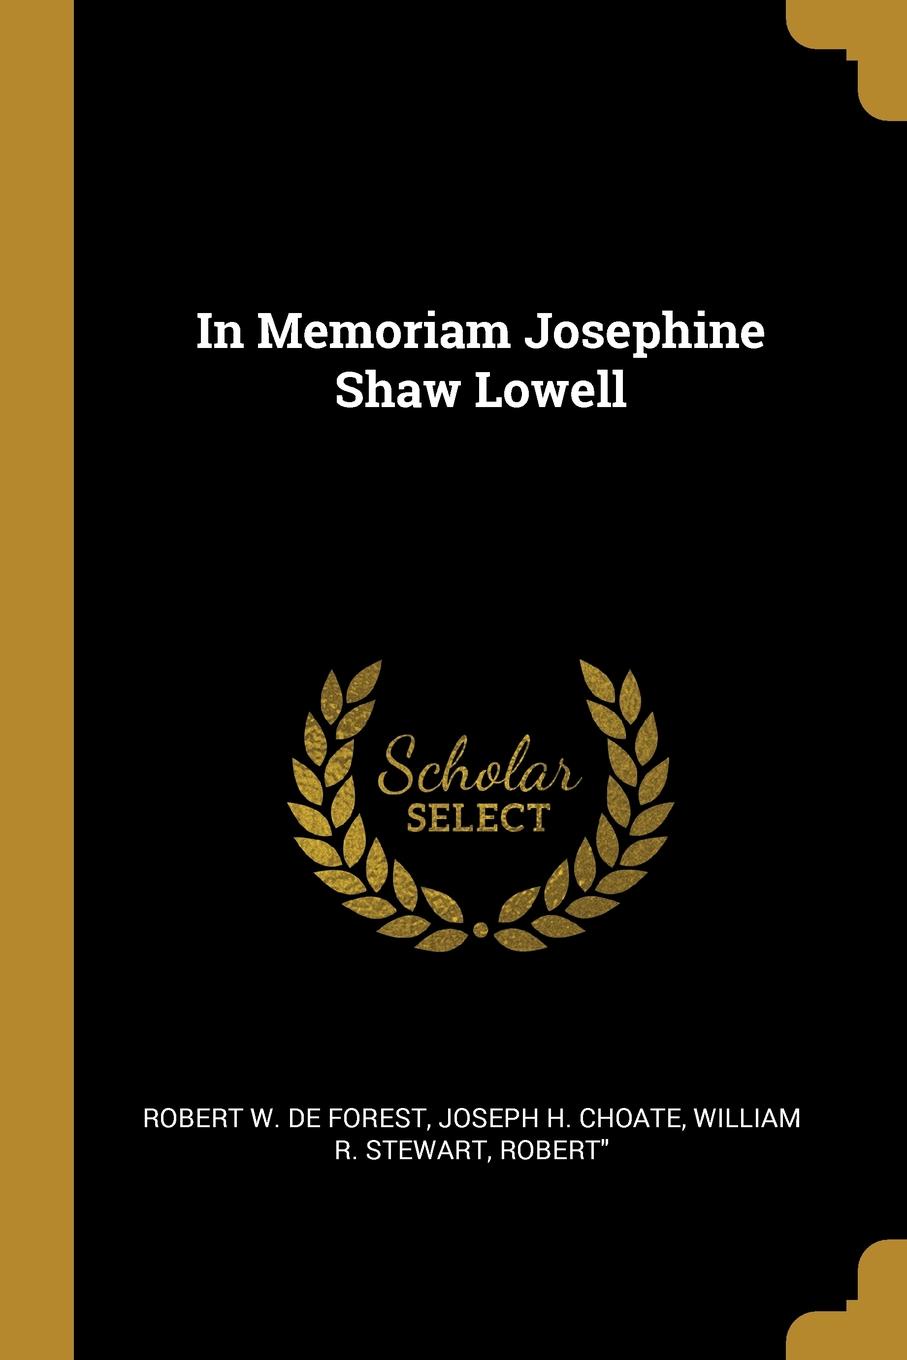 In Memoriam Josephine Shaw Lowell